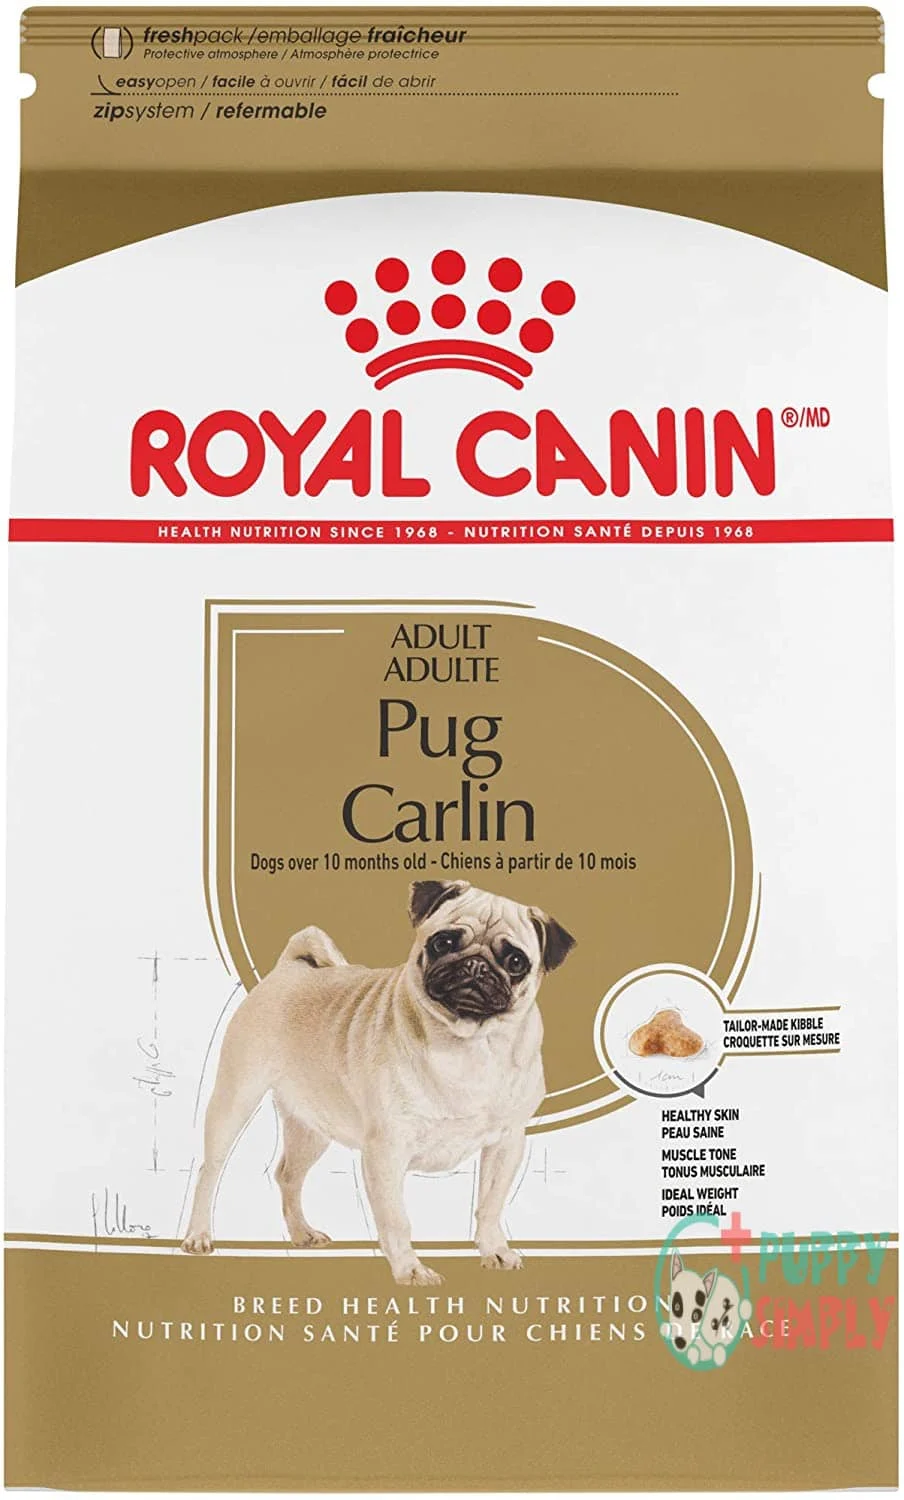 Royal Canin Pug Adult Breed B002V2AUT6